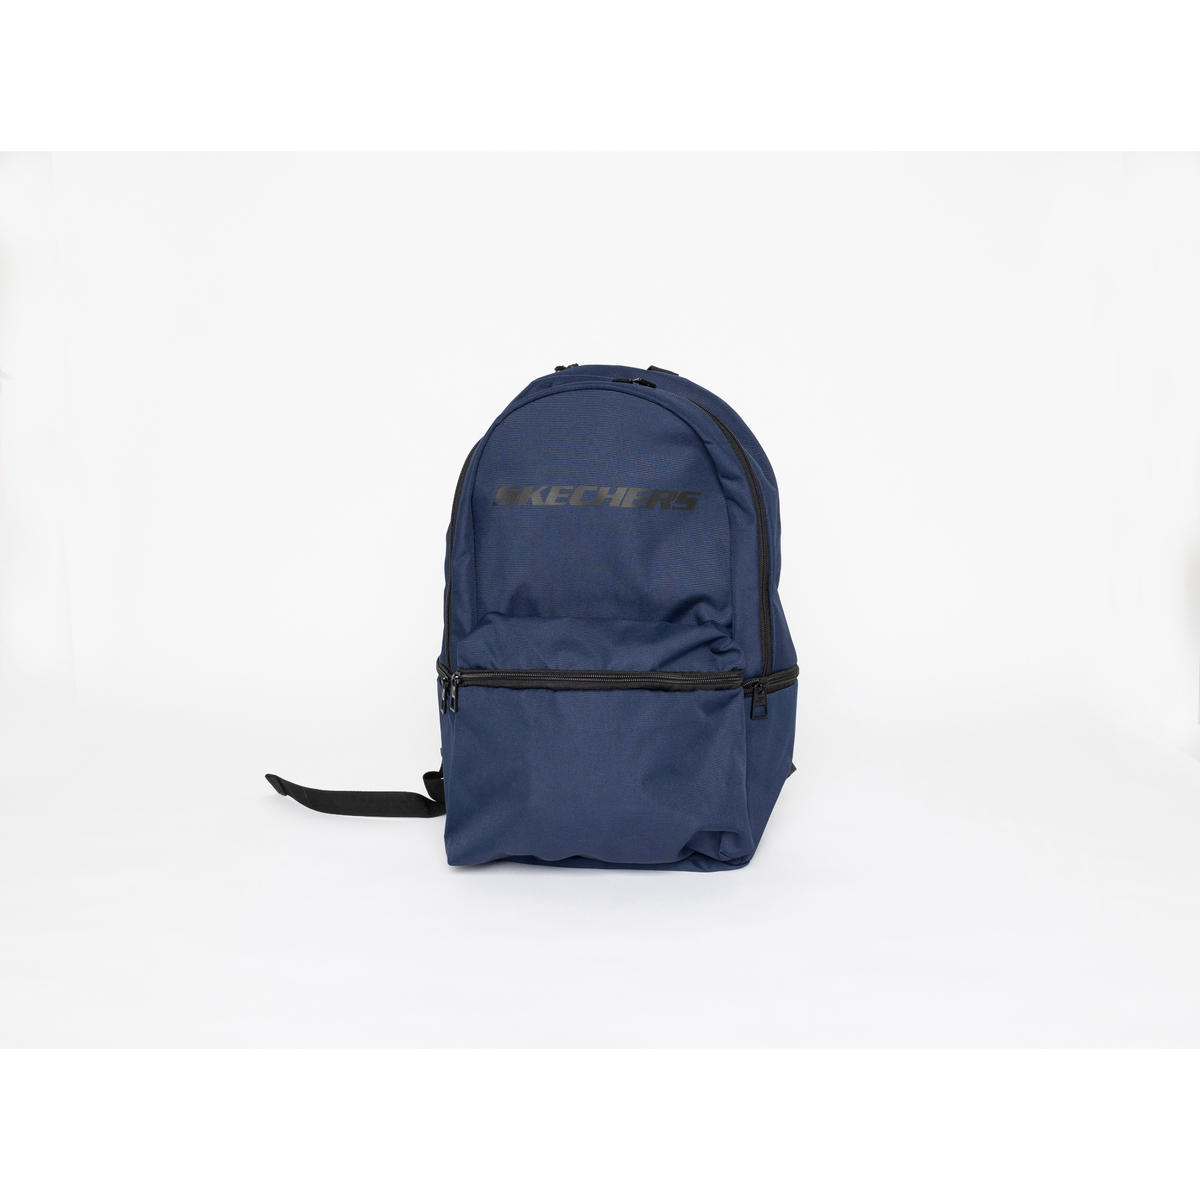 Skechers Backpack S844-49